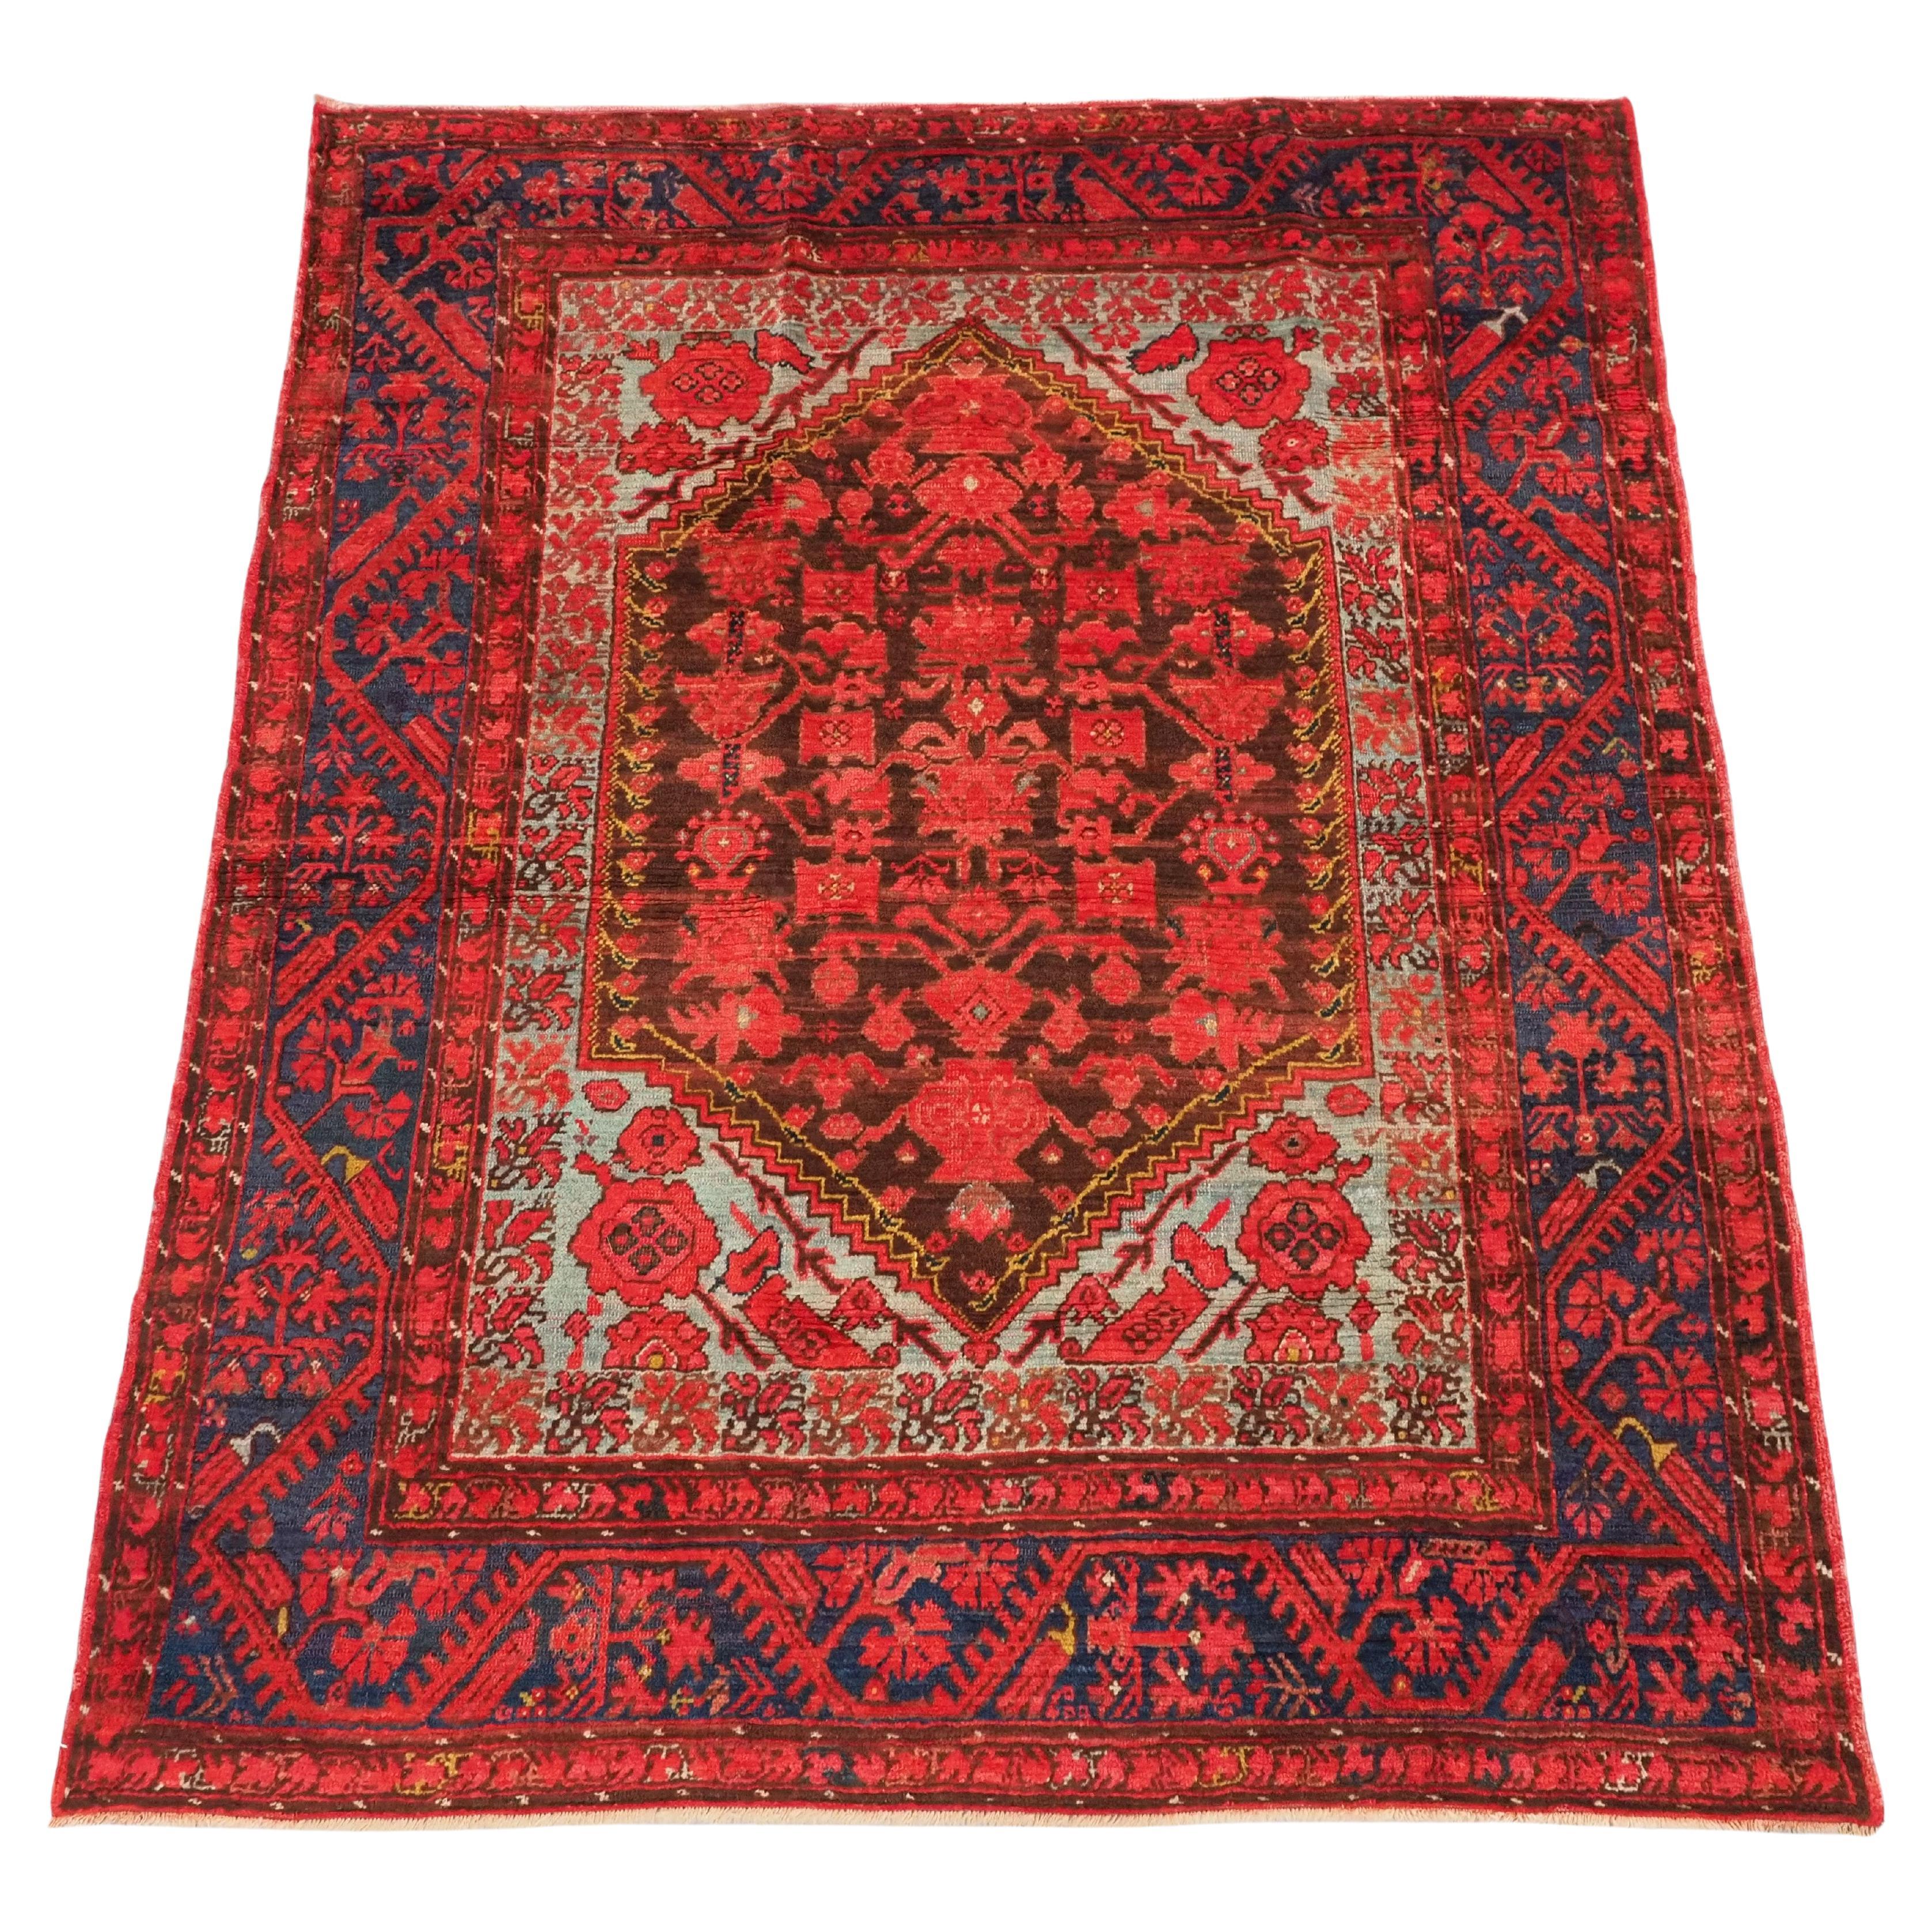  Antique Turkish Komurcu Kula rug of traditional desiign.  Circa 1900. For Sale